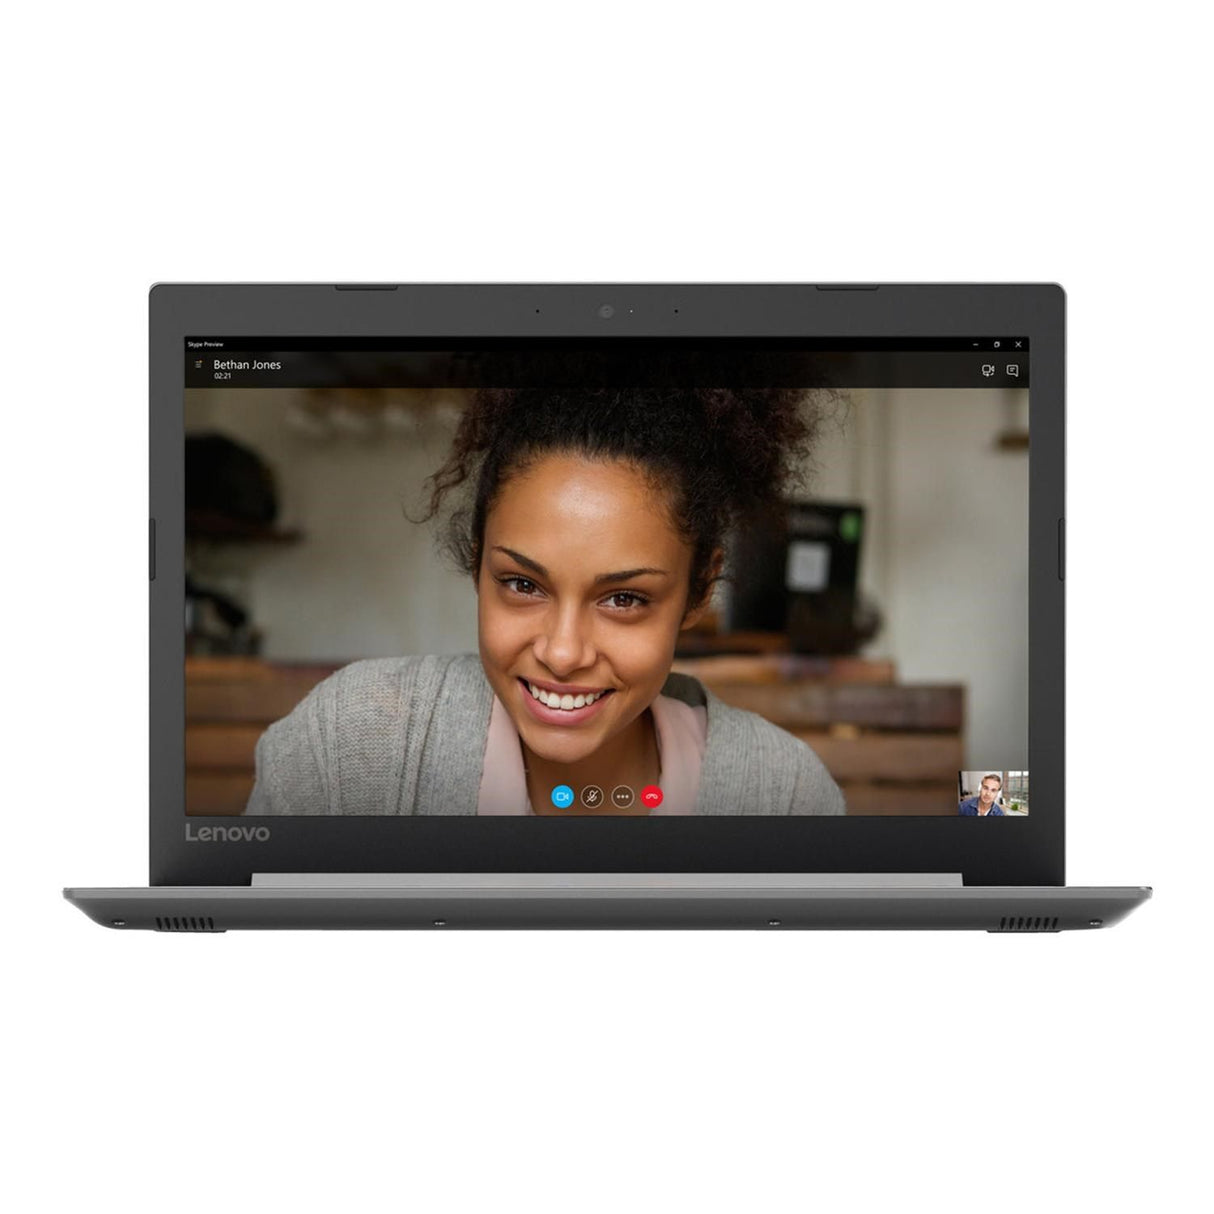 Lenovo IdeaPad 330 81D100G0UK 15.6" Windows 10 Laptop Intel Celeron N4000, 4GB RAM, 1TB HDD - Grey